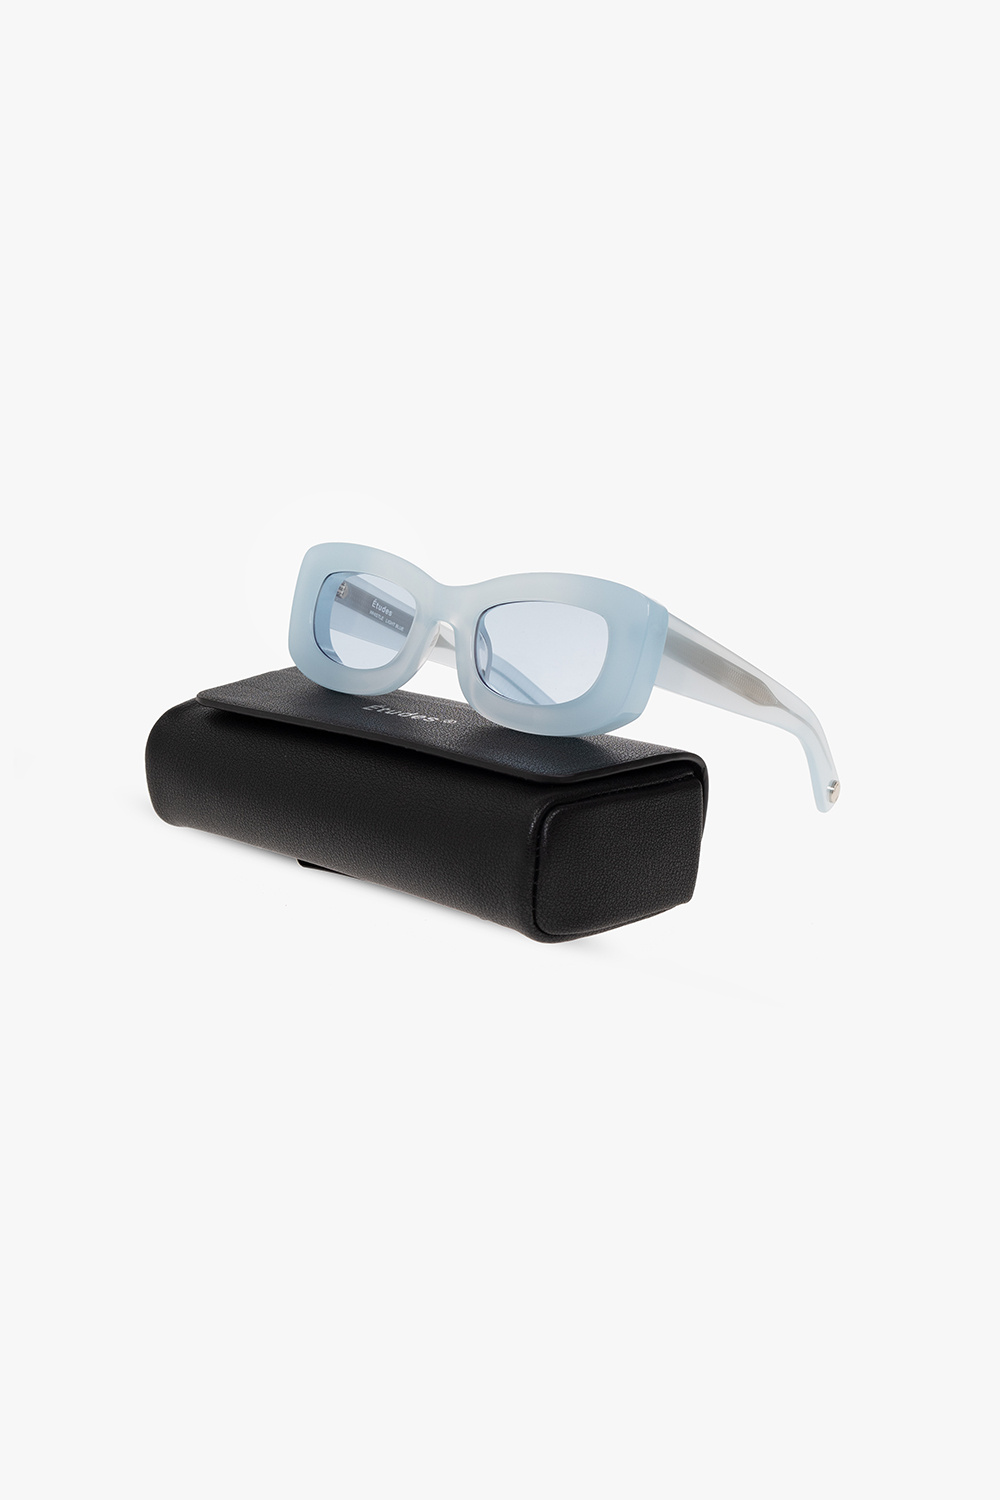 Etudes ‘Whistle’ Kuboraum sunglasses